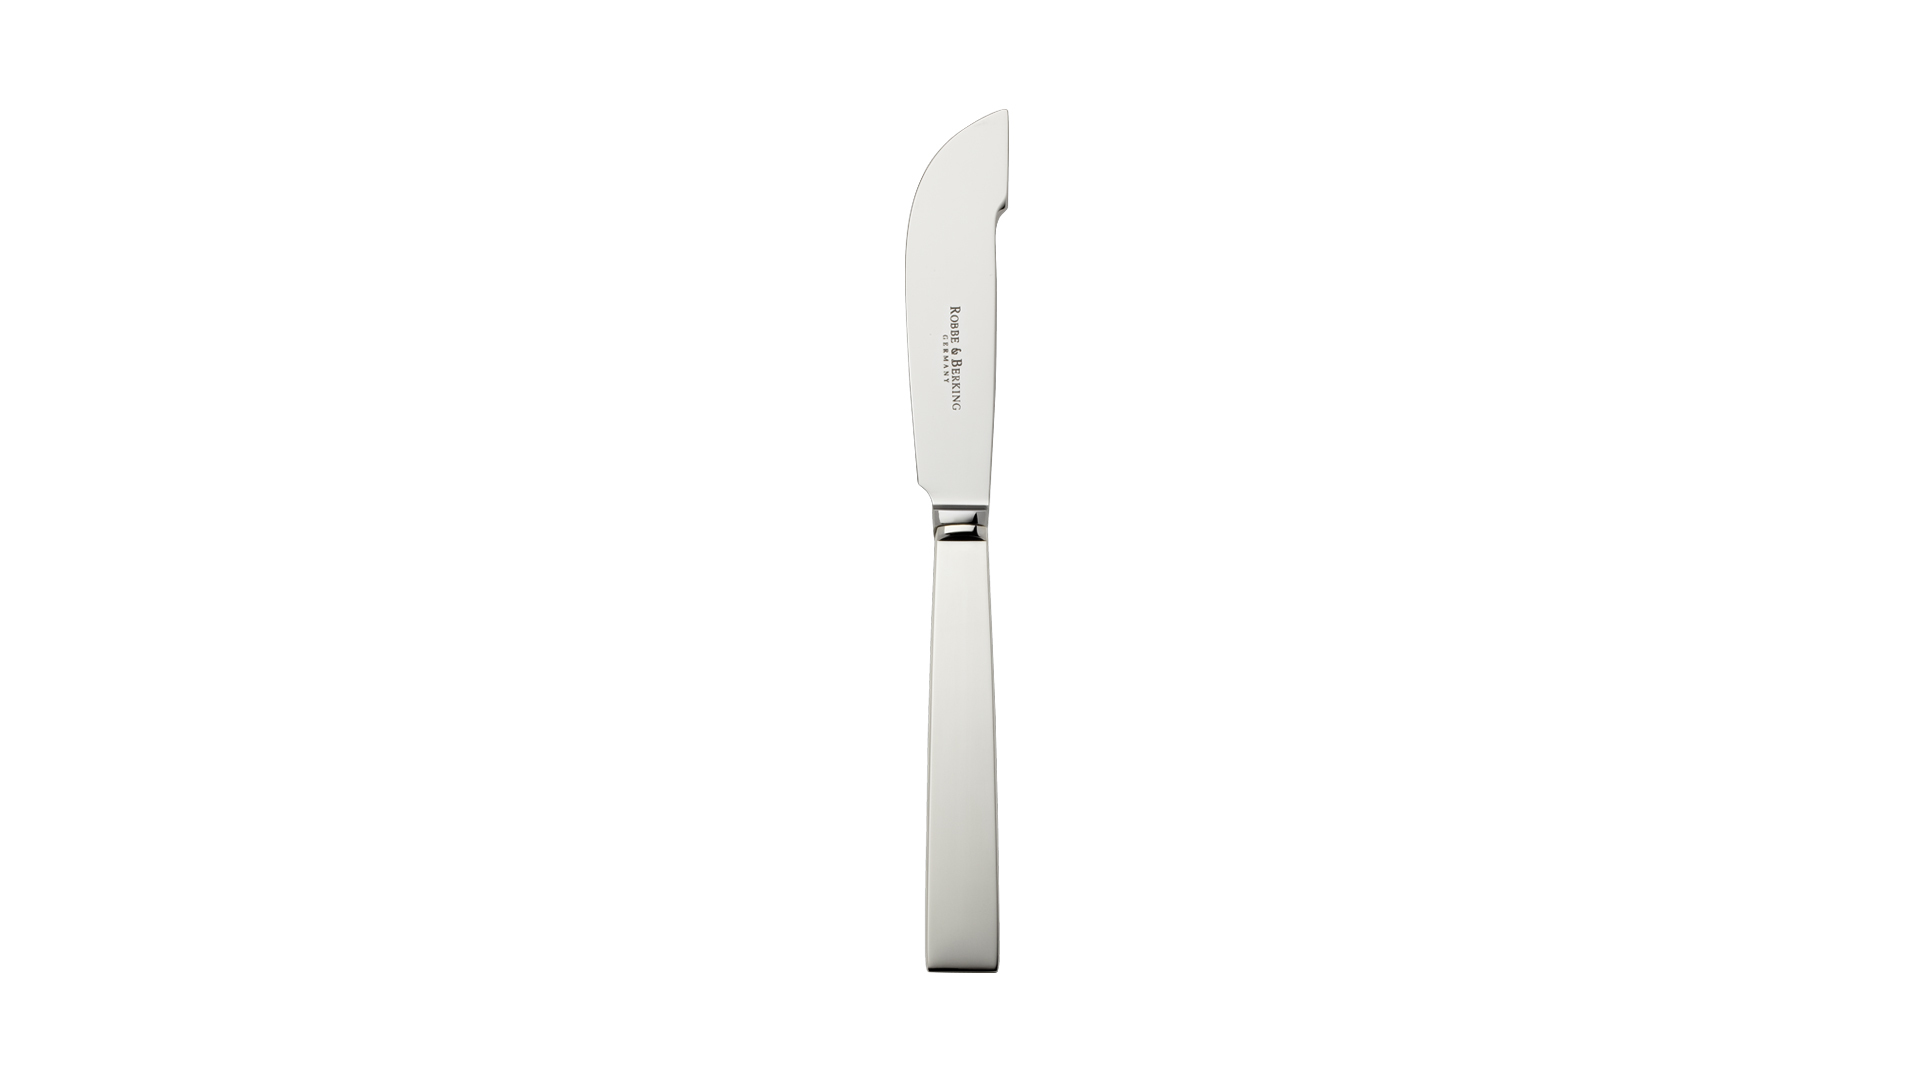 Нож для сыра Robbe&Berking Рива 20,5 см